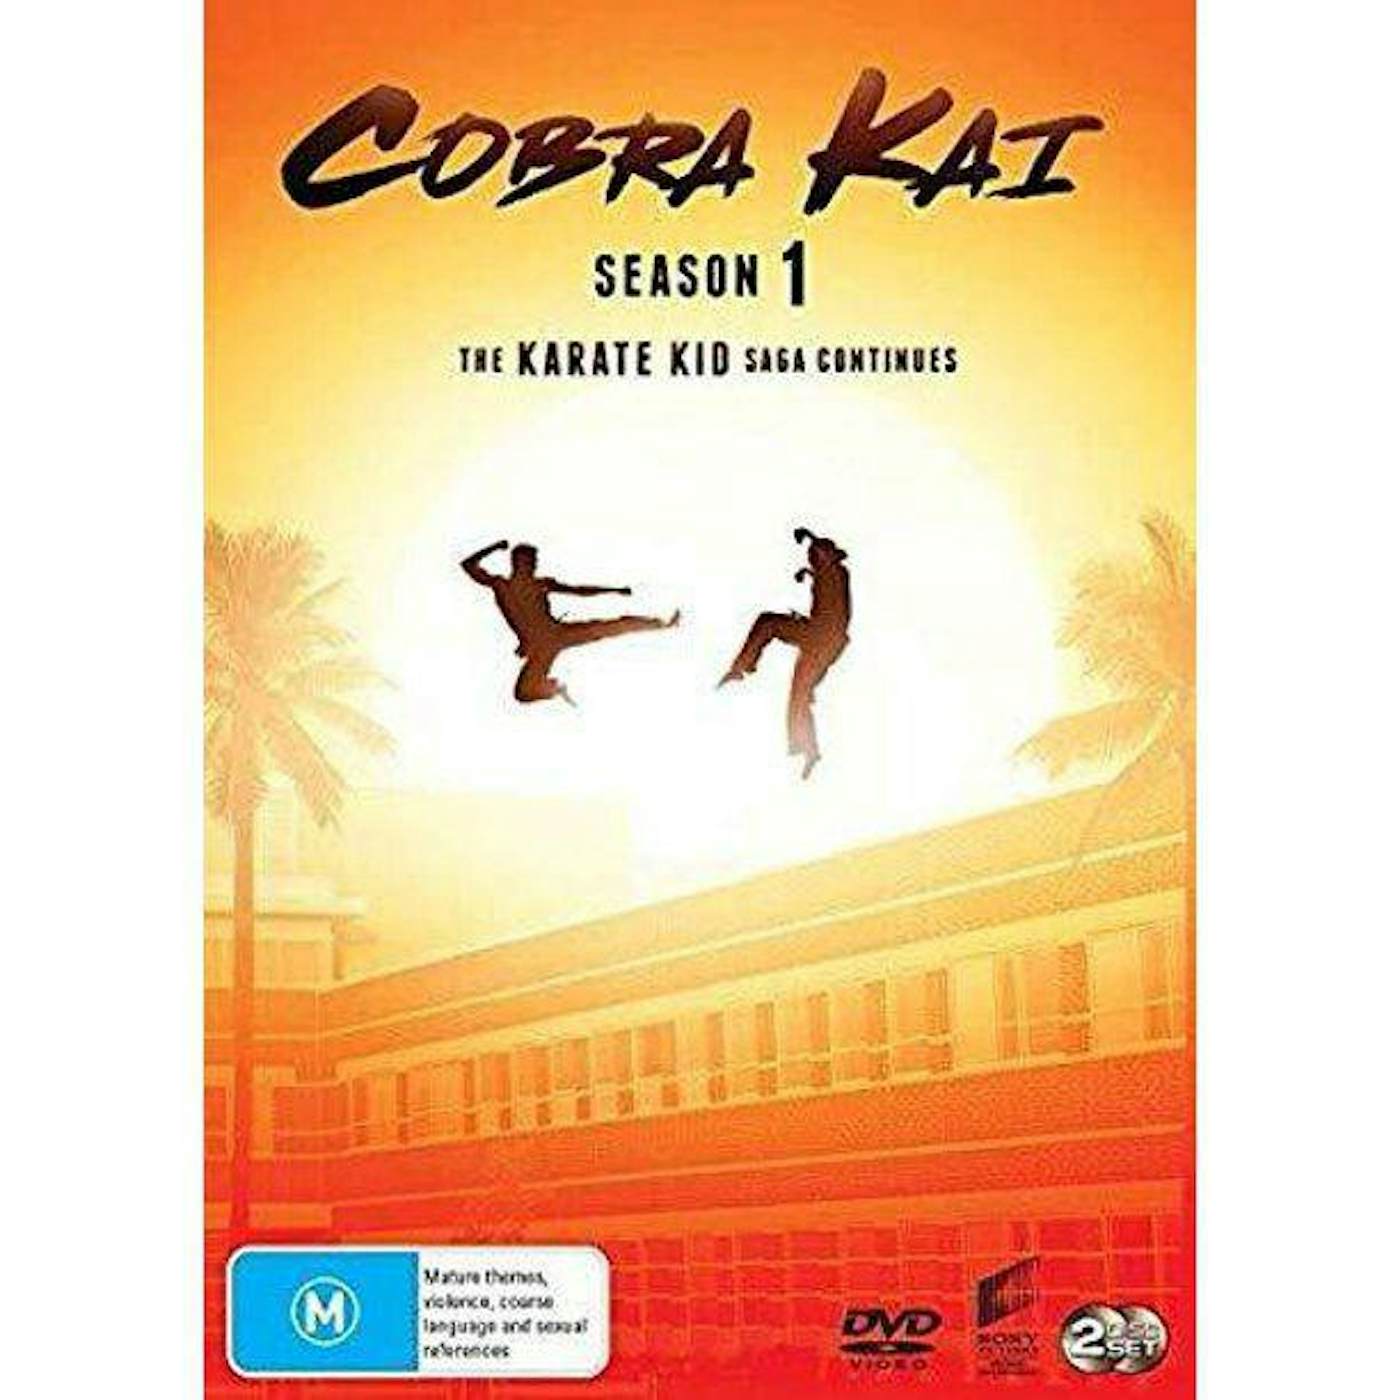 COBRA KAI: SEASON 1 DVD